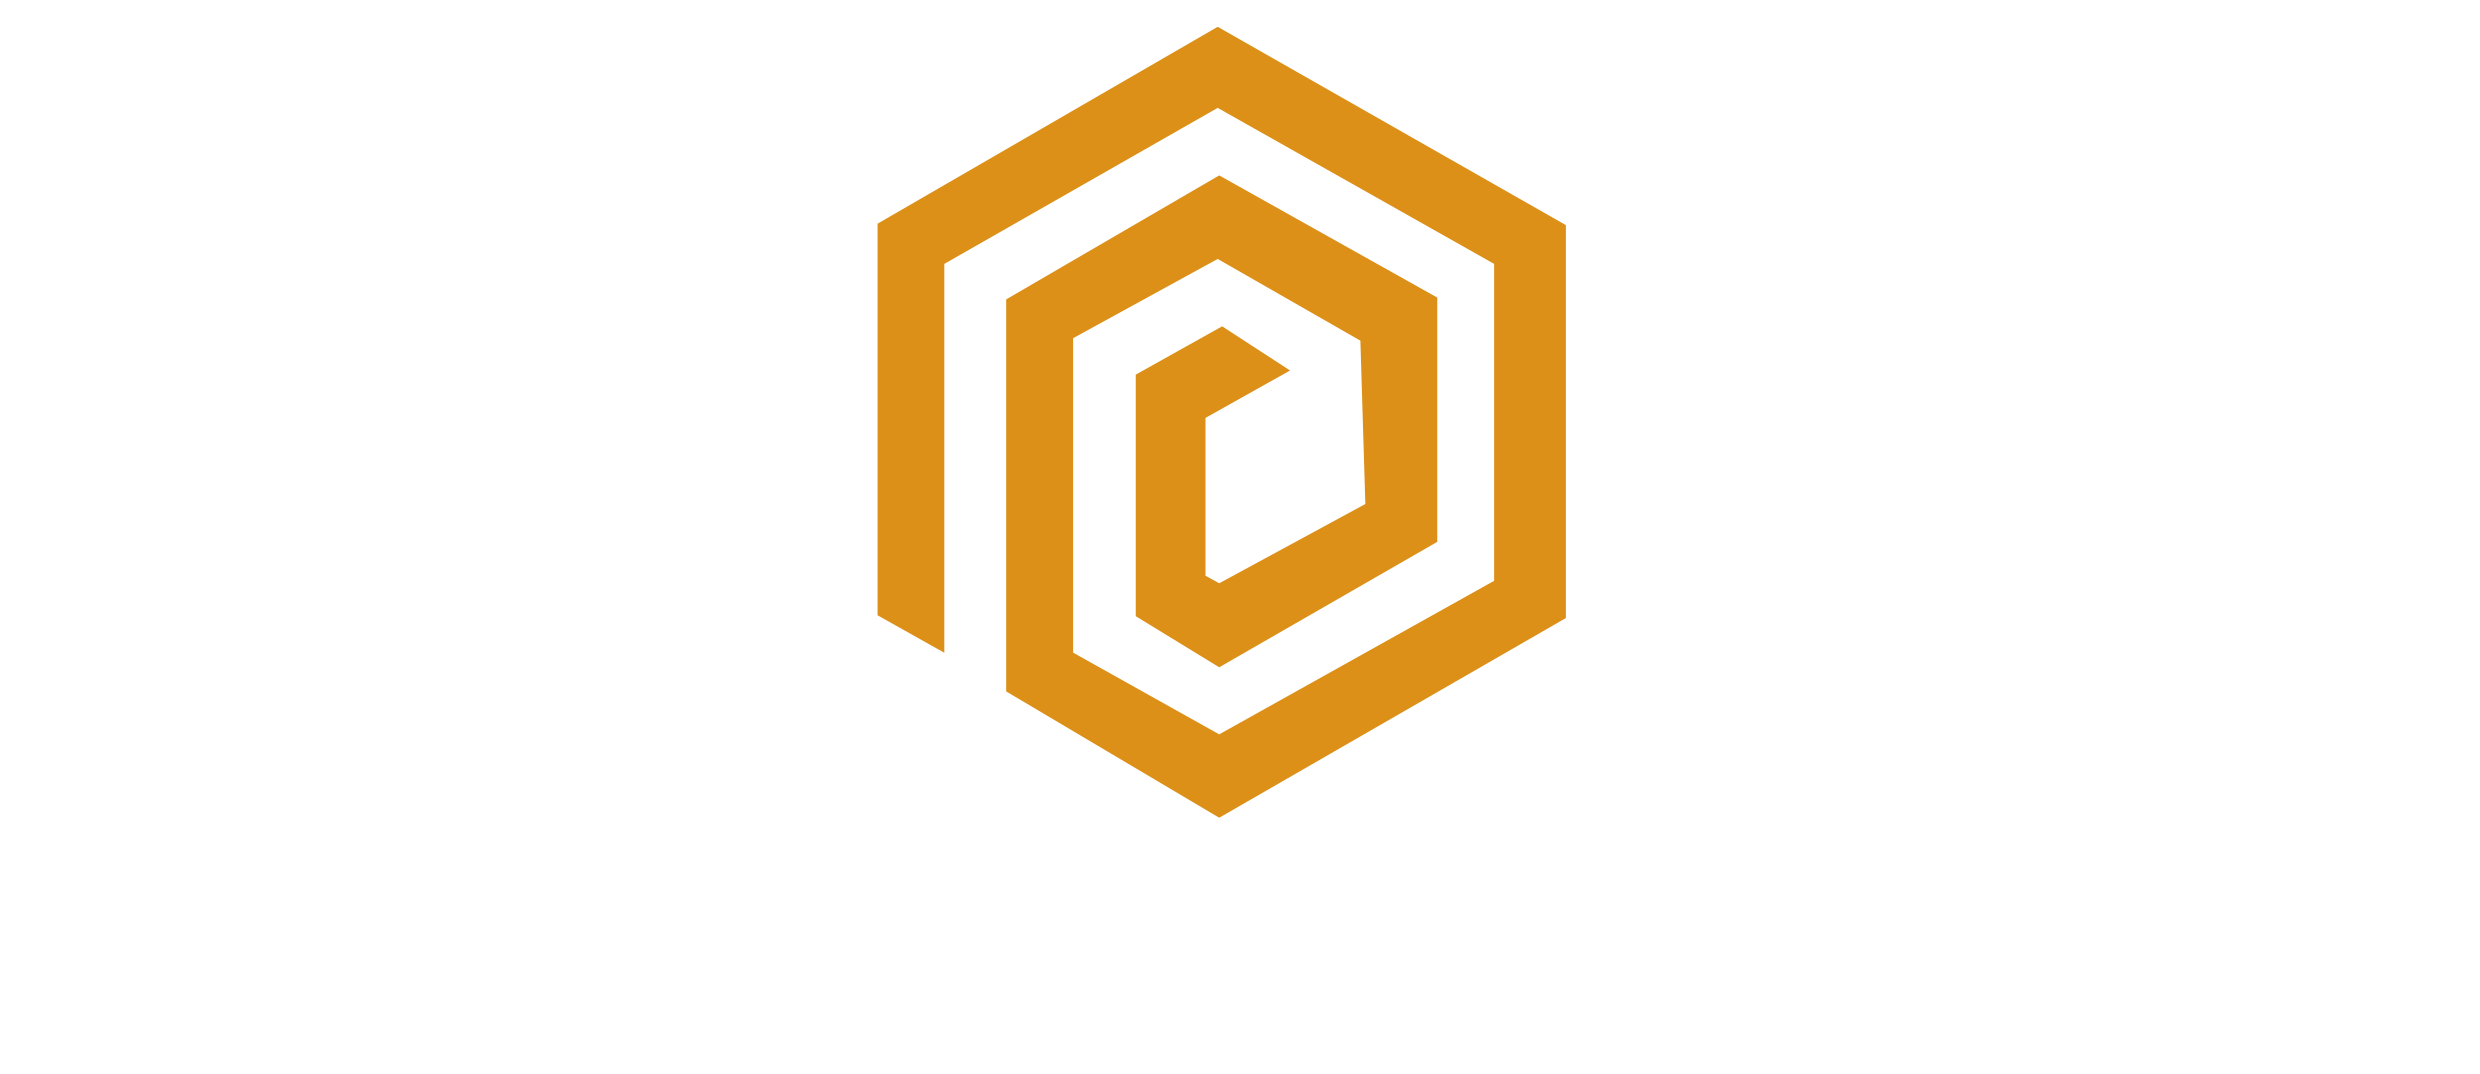 K.Stoop Sloopwerken